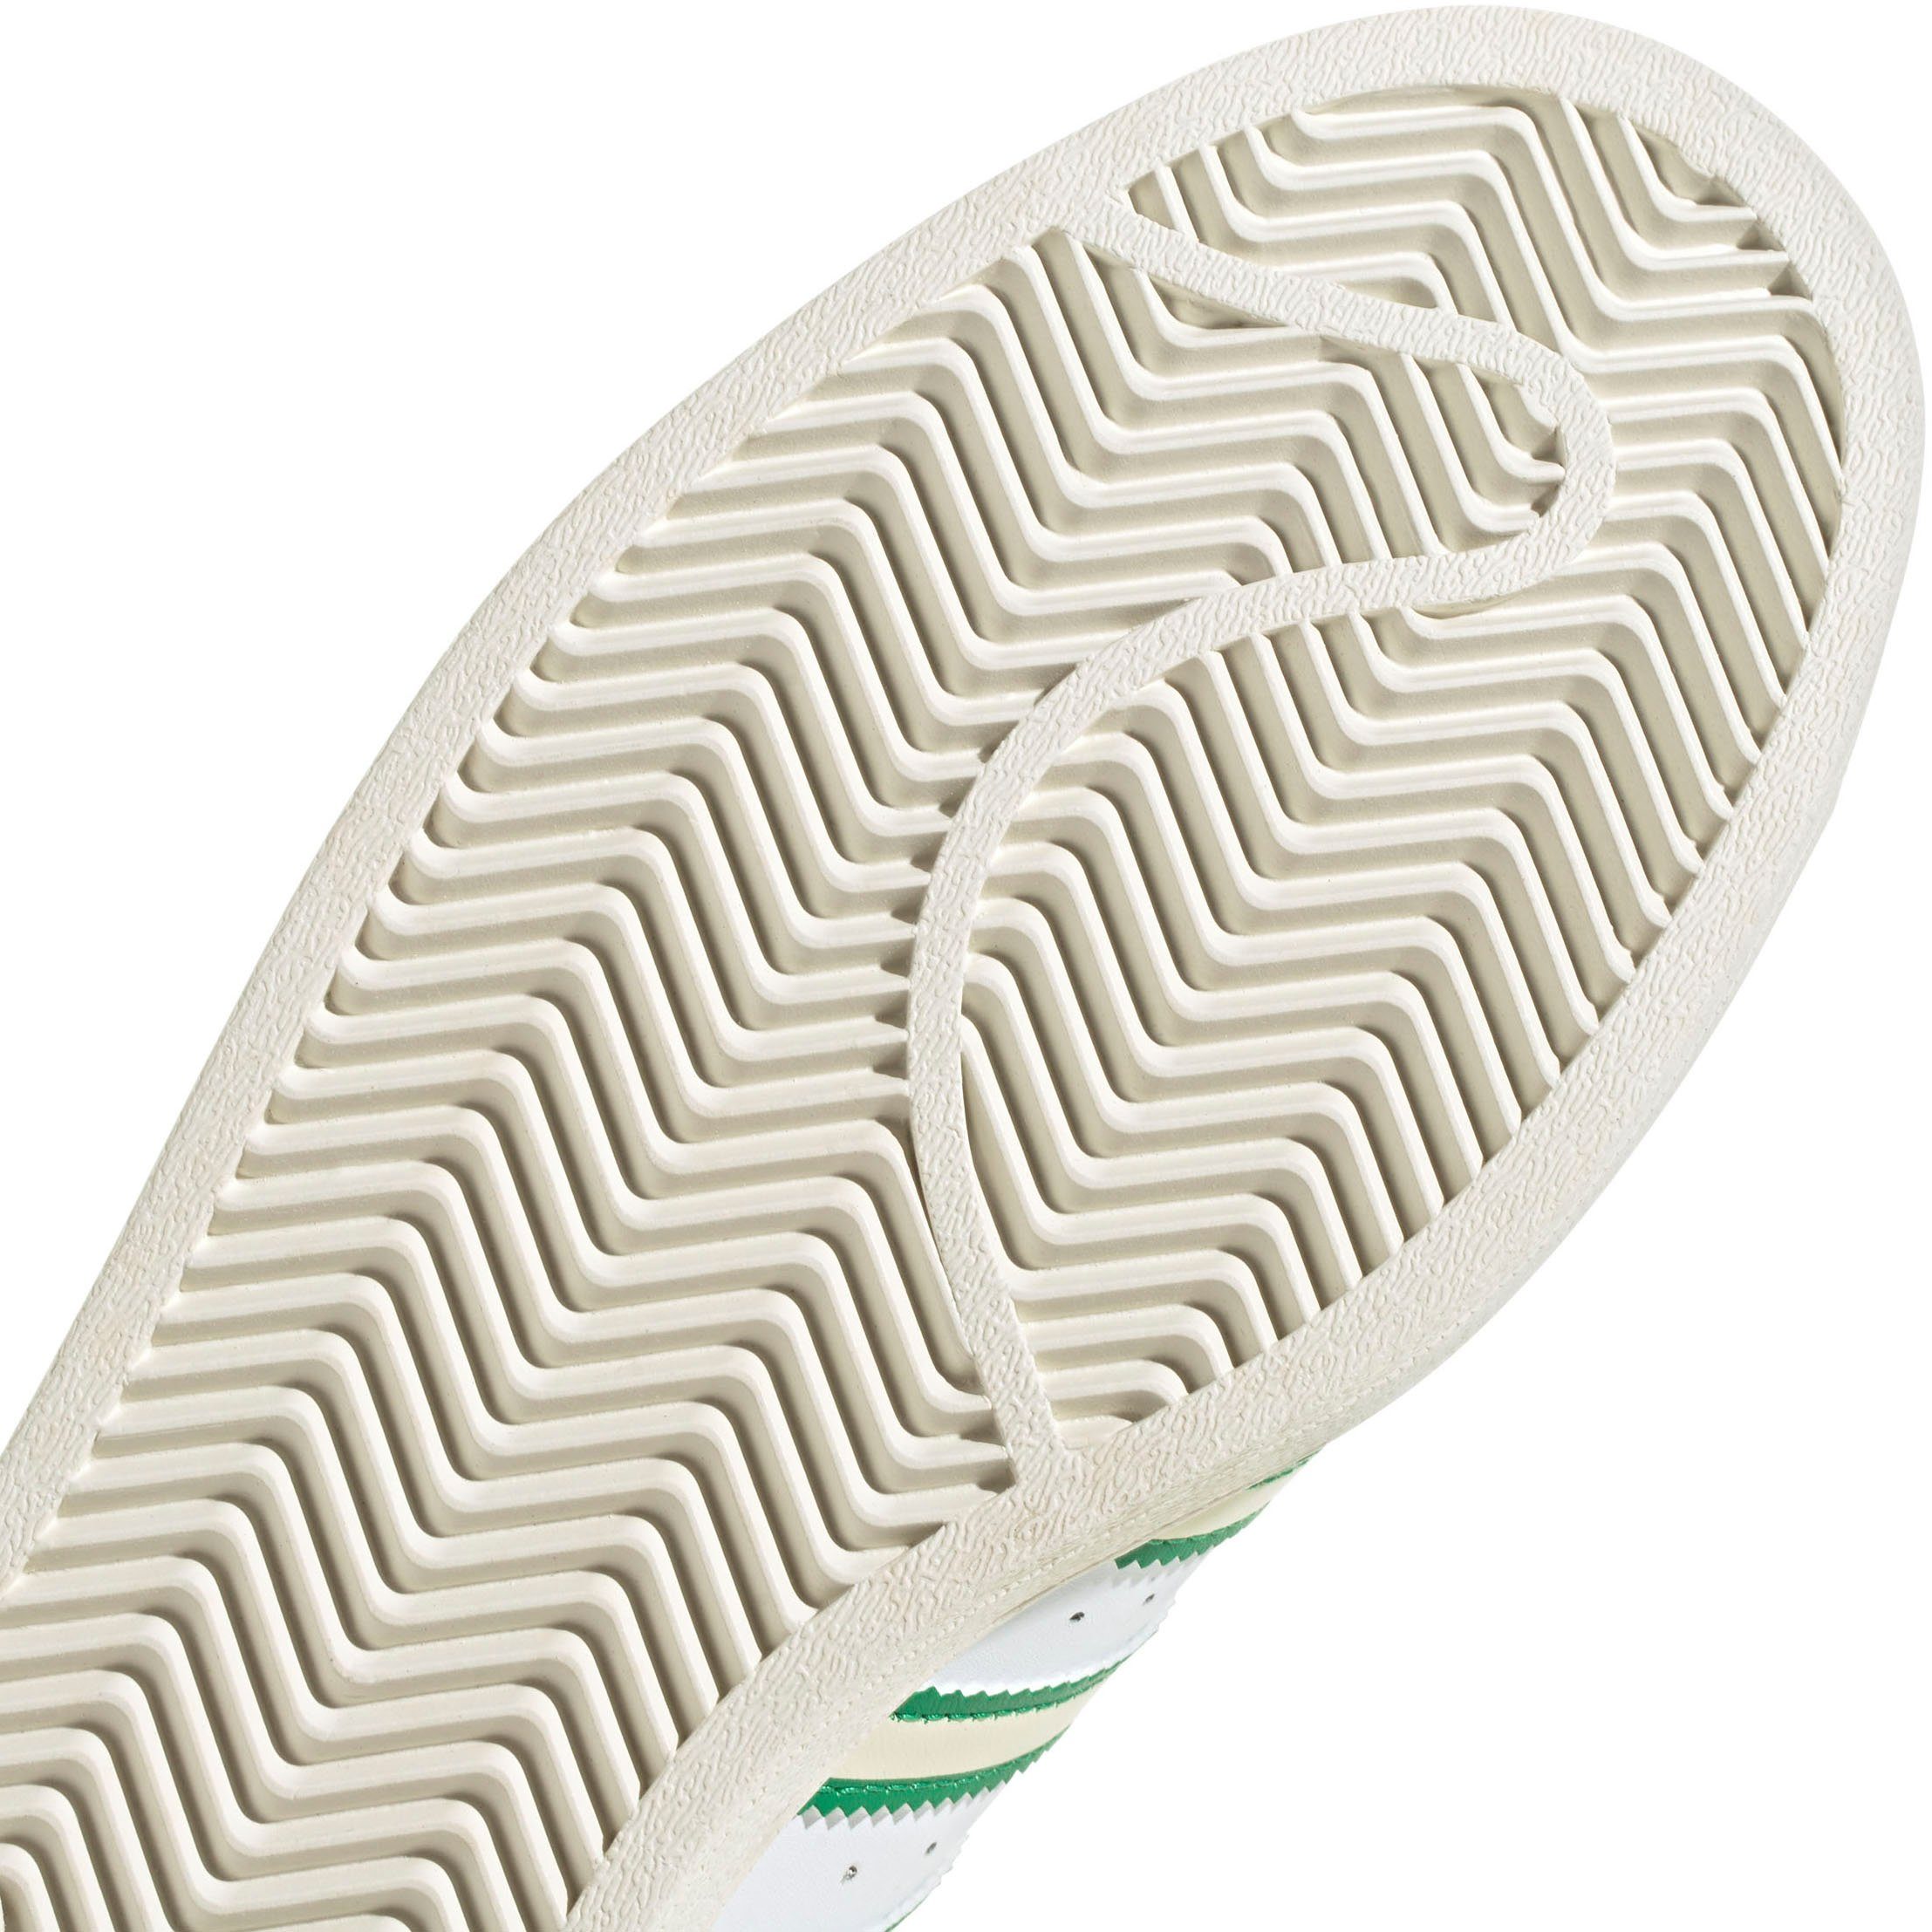 weiß-grün Sneaker adidas Originals SUPERSTAR